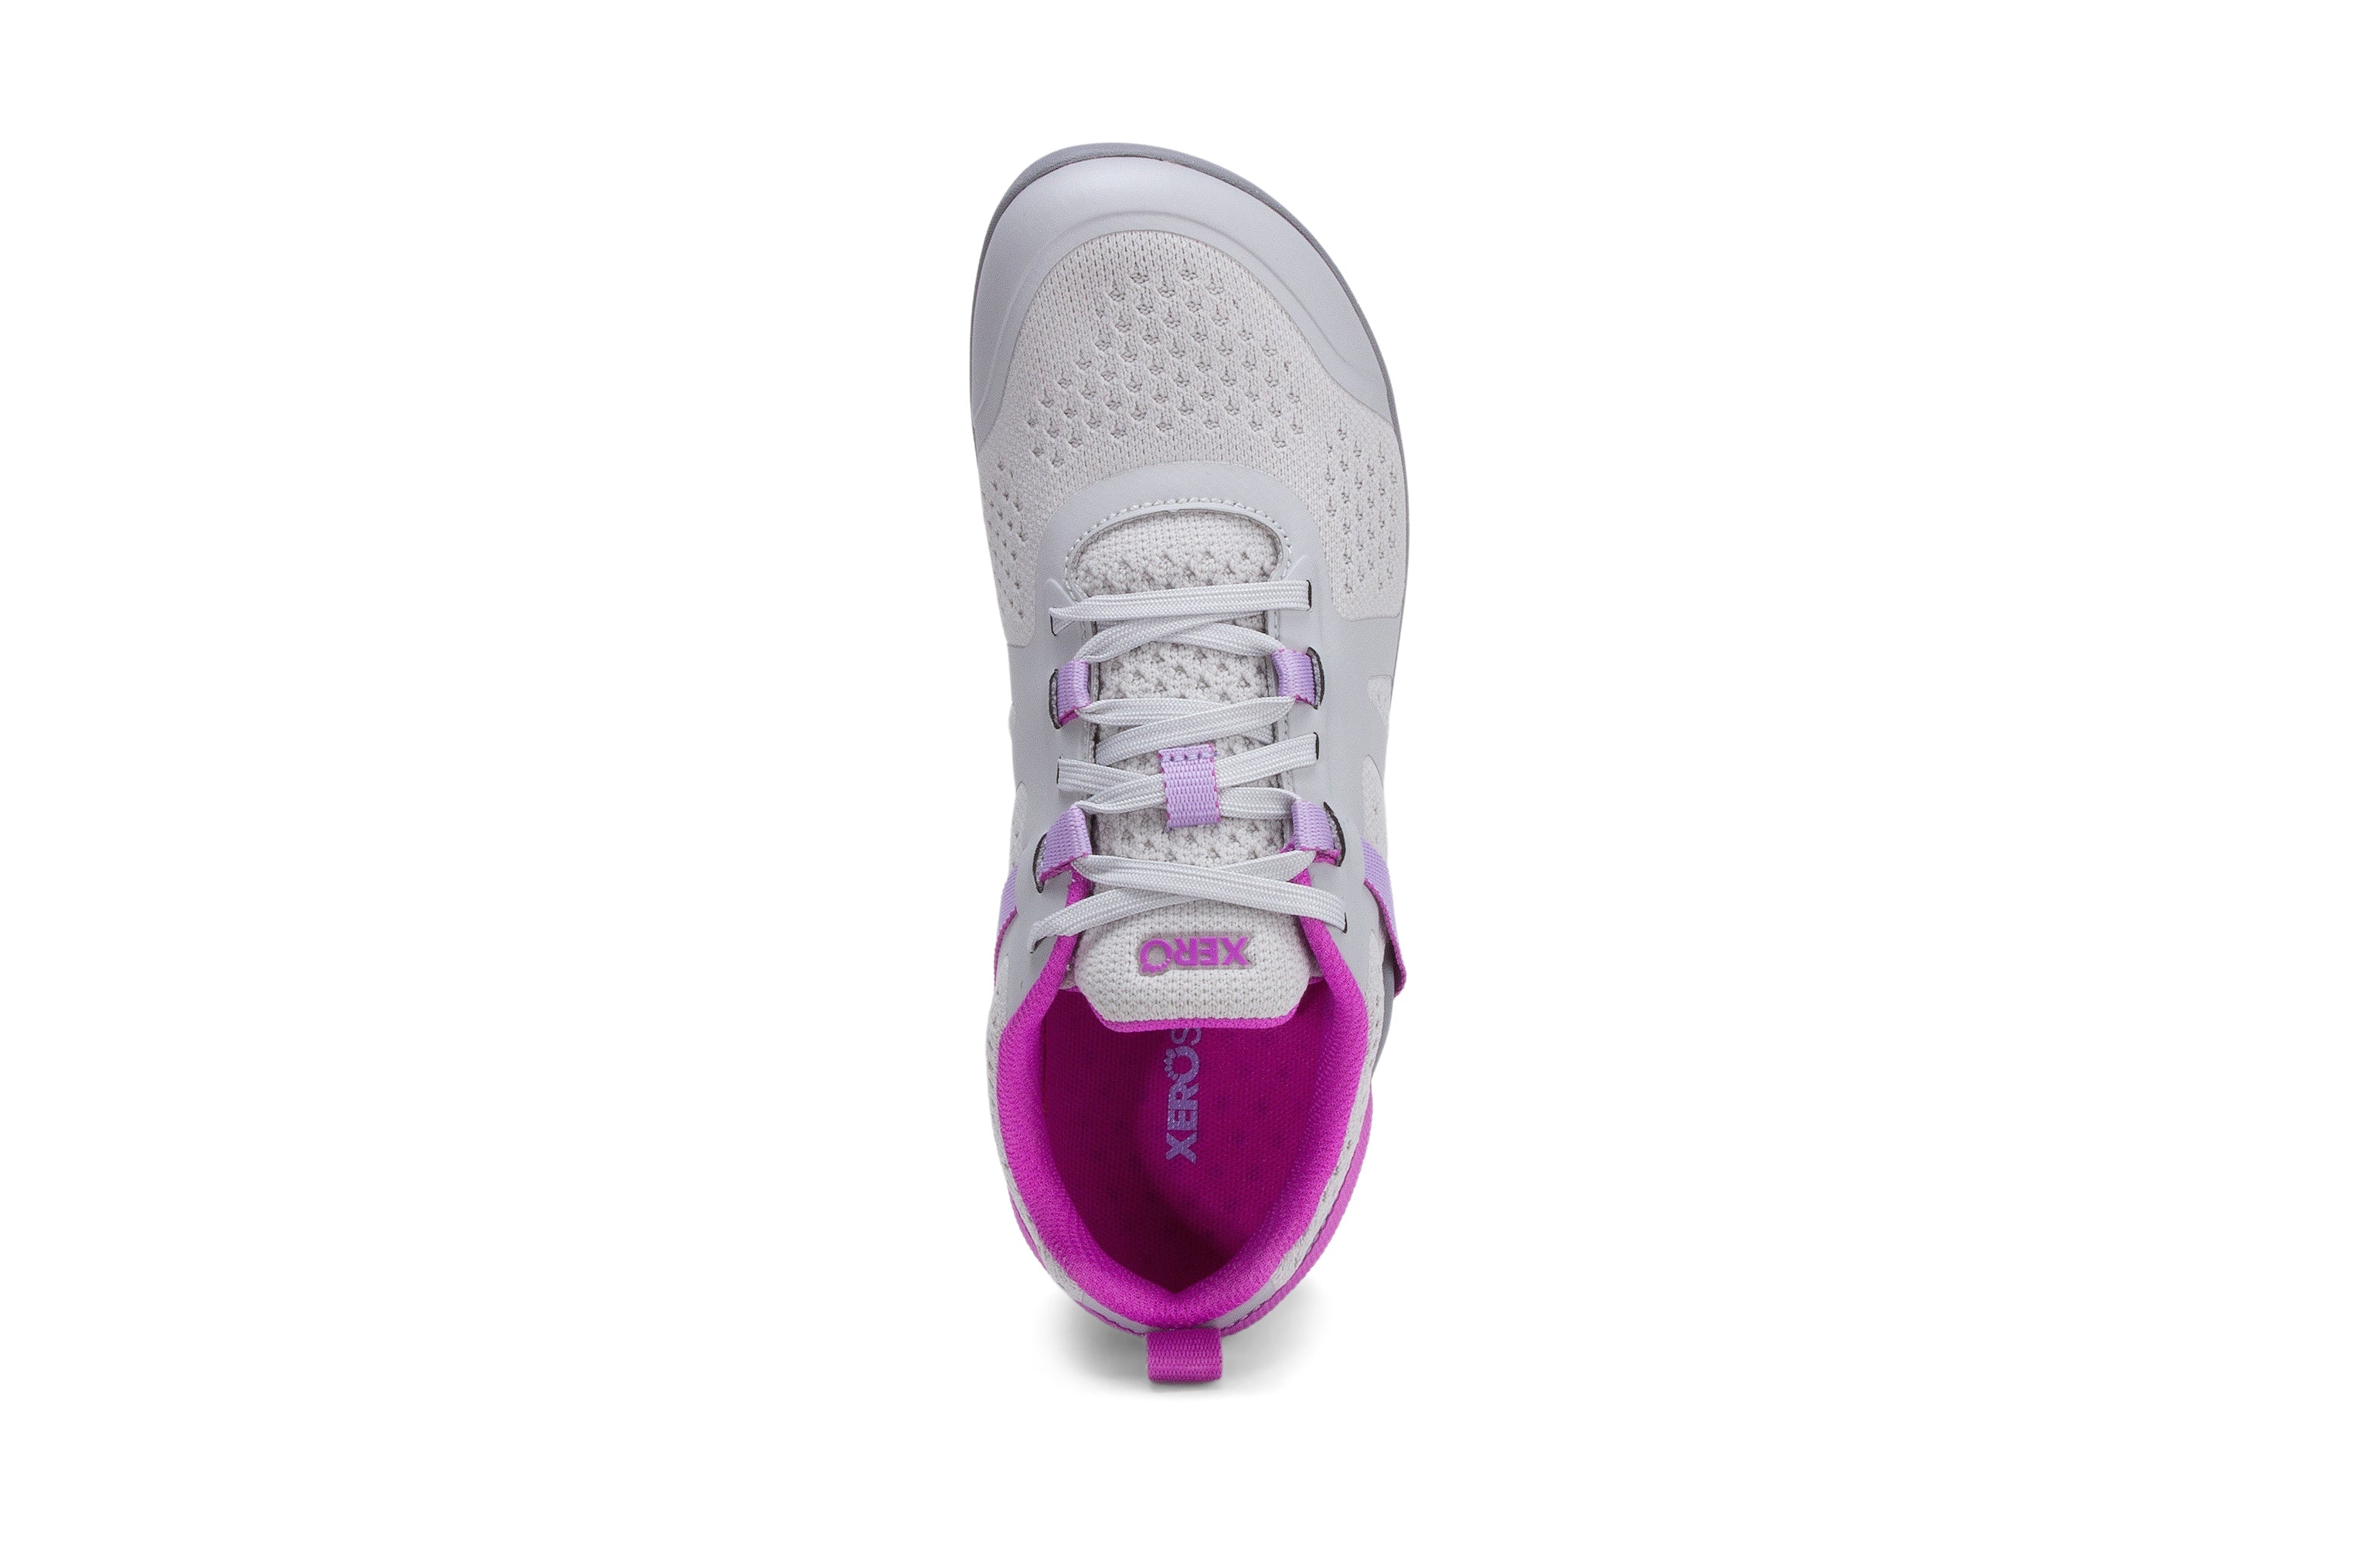 Xero Shoes Prio Neo Womens barfods athleisure trainer til kvinder i farven storm, top